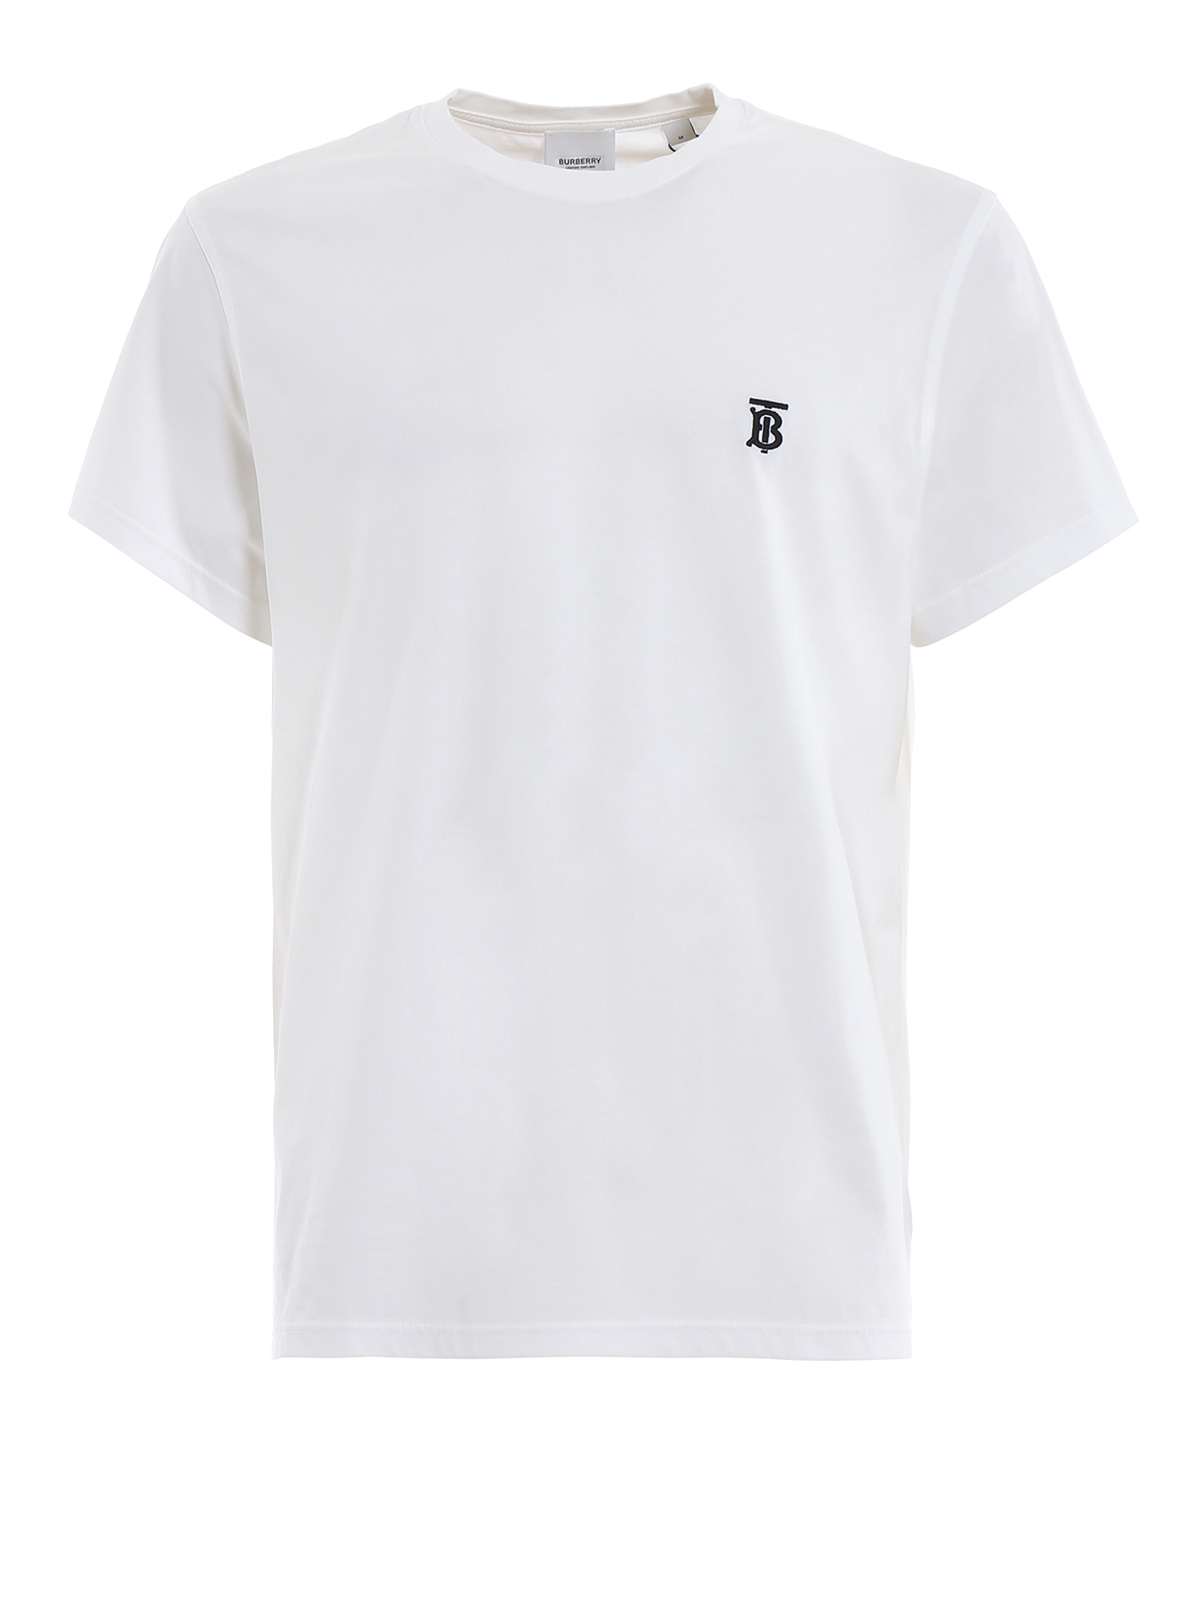 T-shirts Burberry - Parker white T-shirt - 8014021 | Shop online at iKRIX